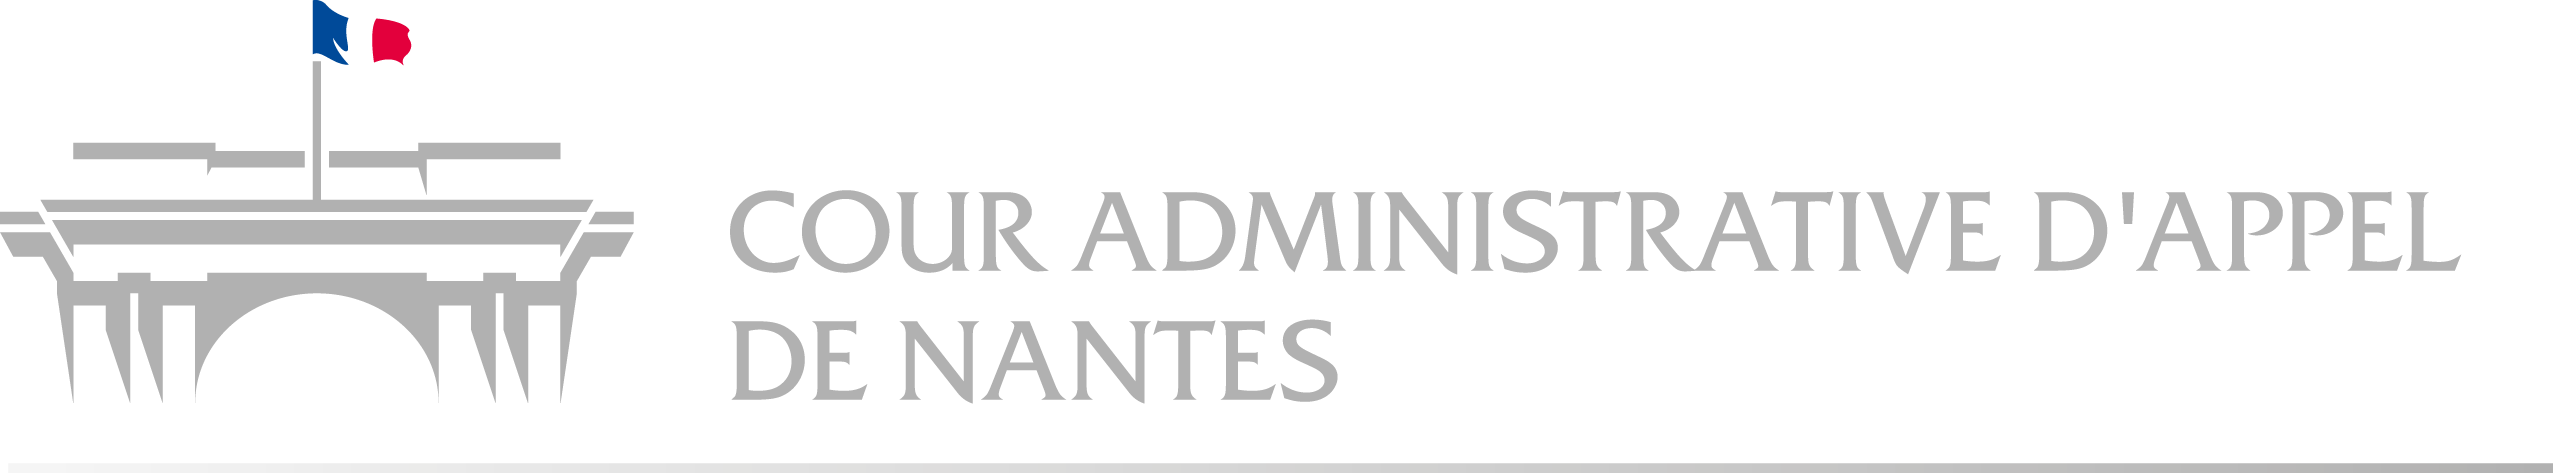 Logo Cour administrative d'appel de Nantes